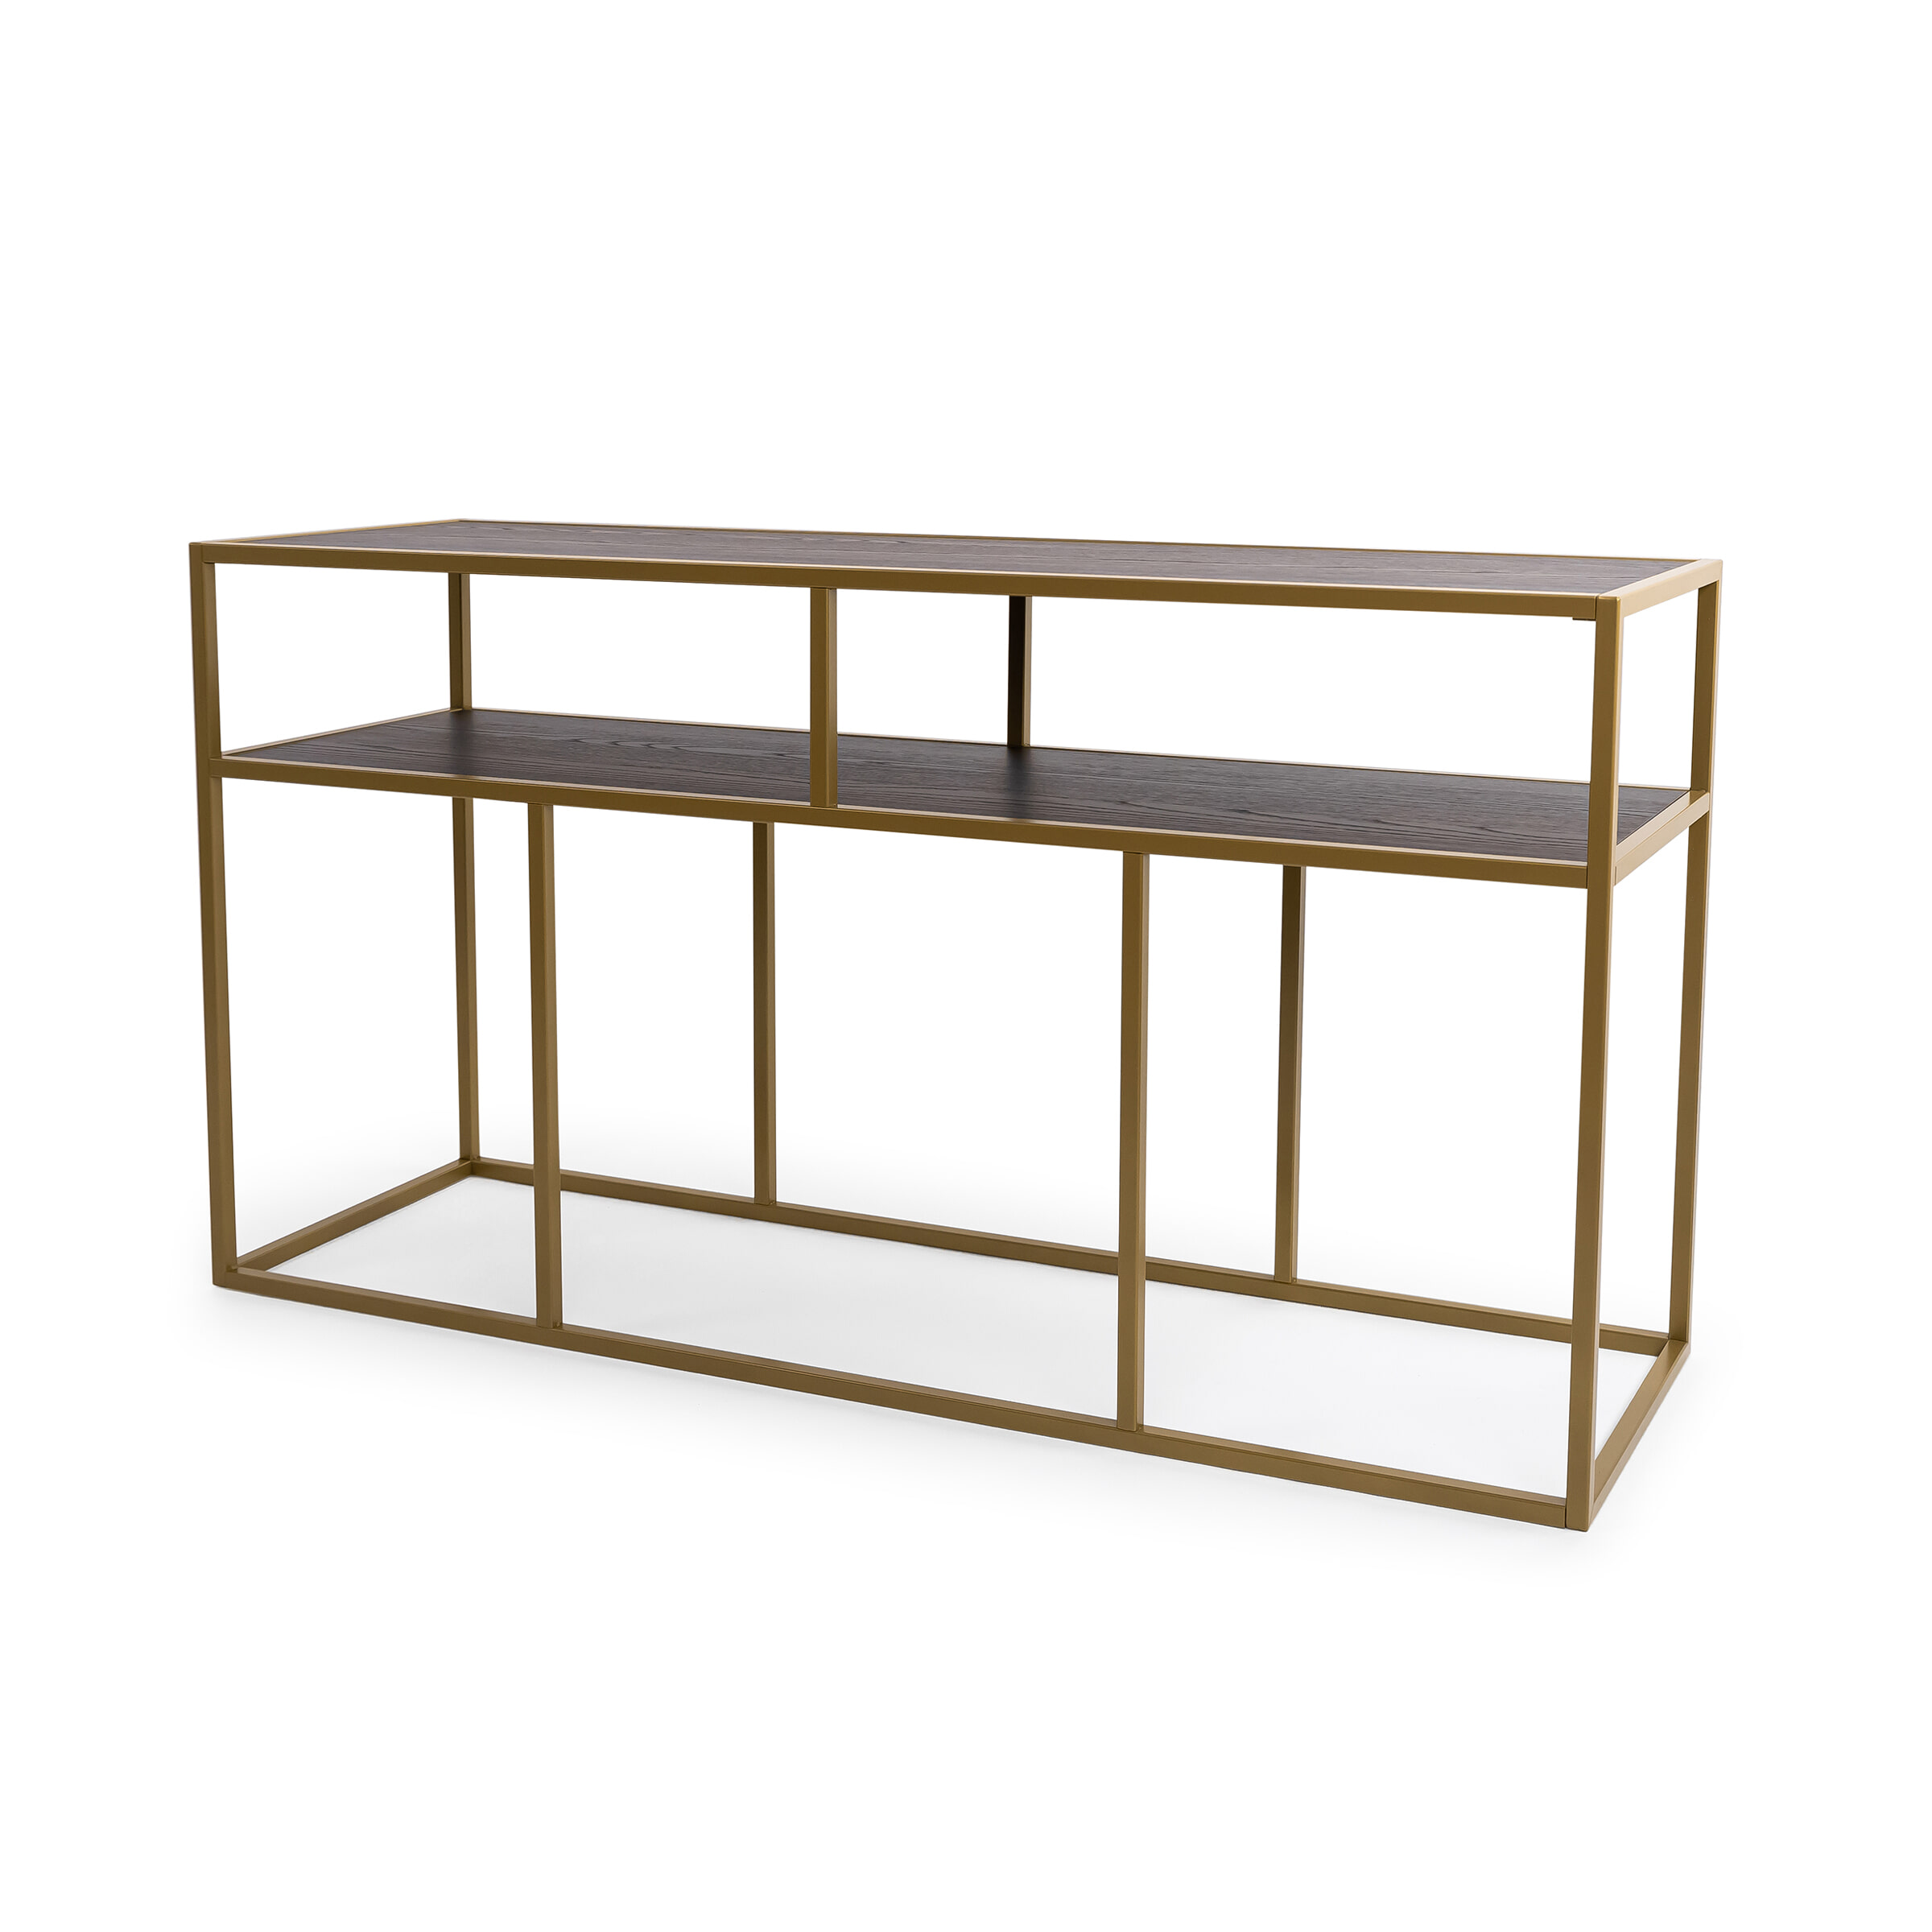 Stalux Side-table Teun 150cm - goud / bruin hout